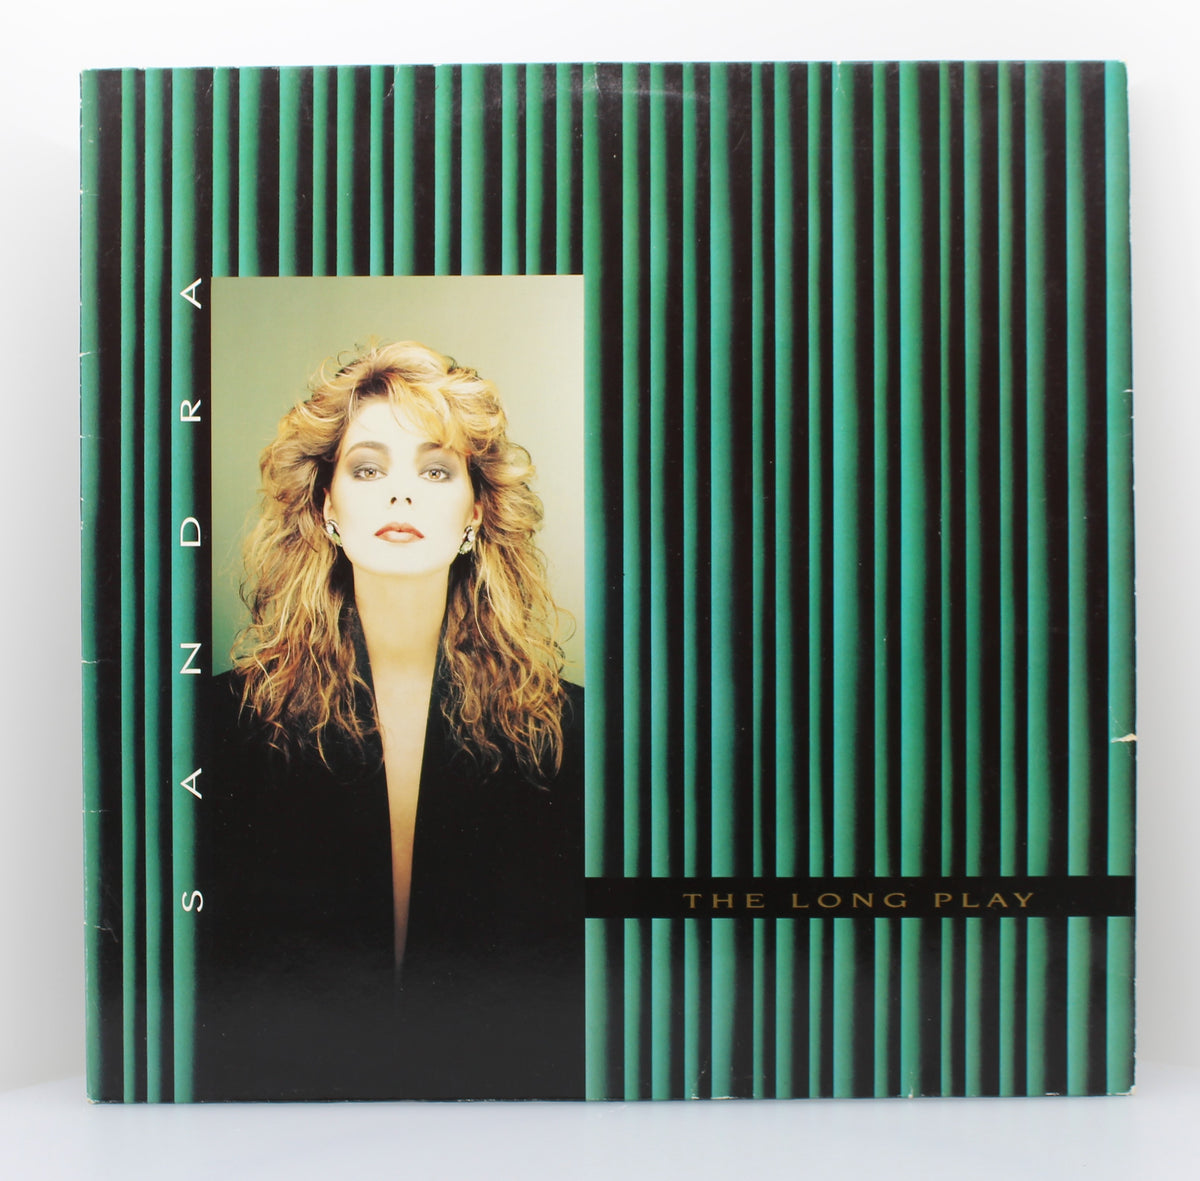 Sandra ‎– The Long Play, Vinyl, LP, Album 33⅓rpm, Stereo, Europe 1985